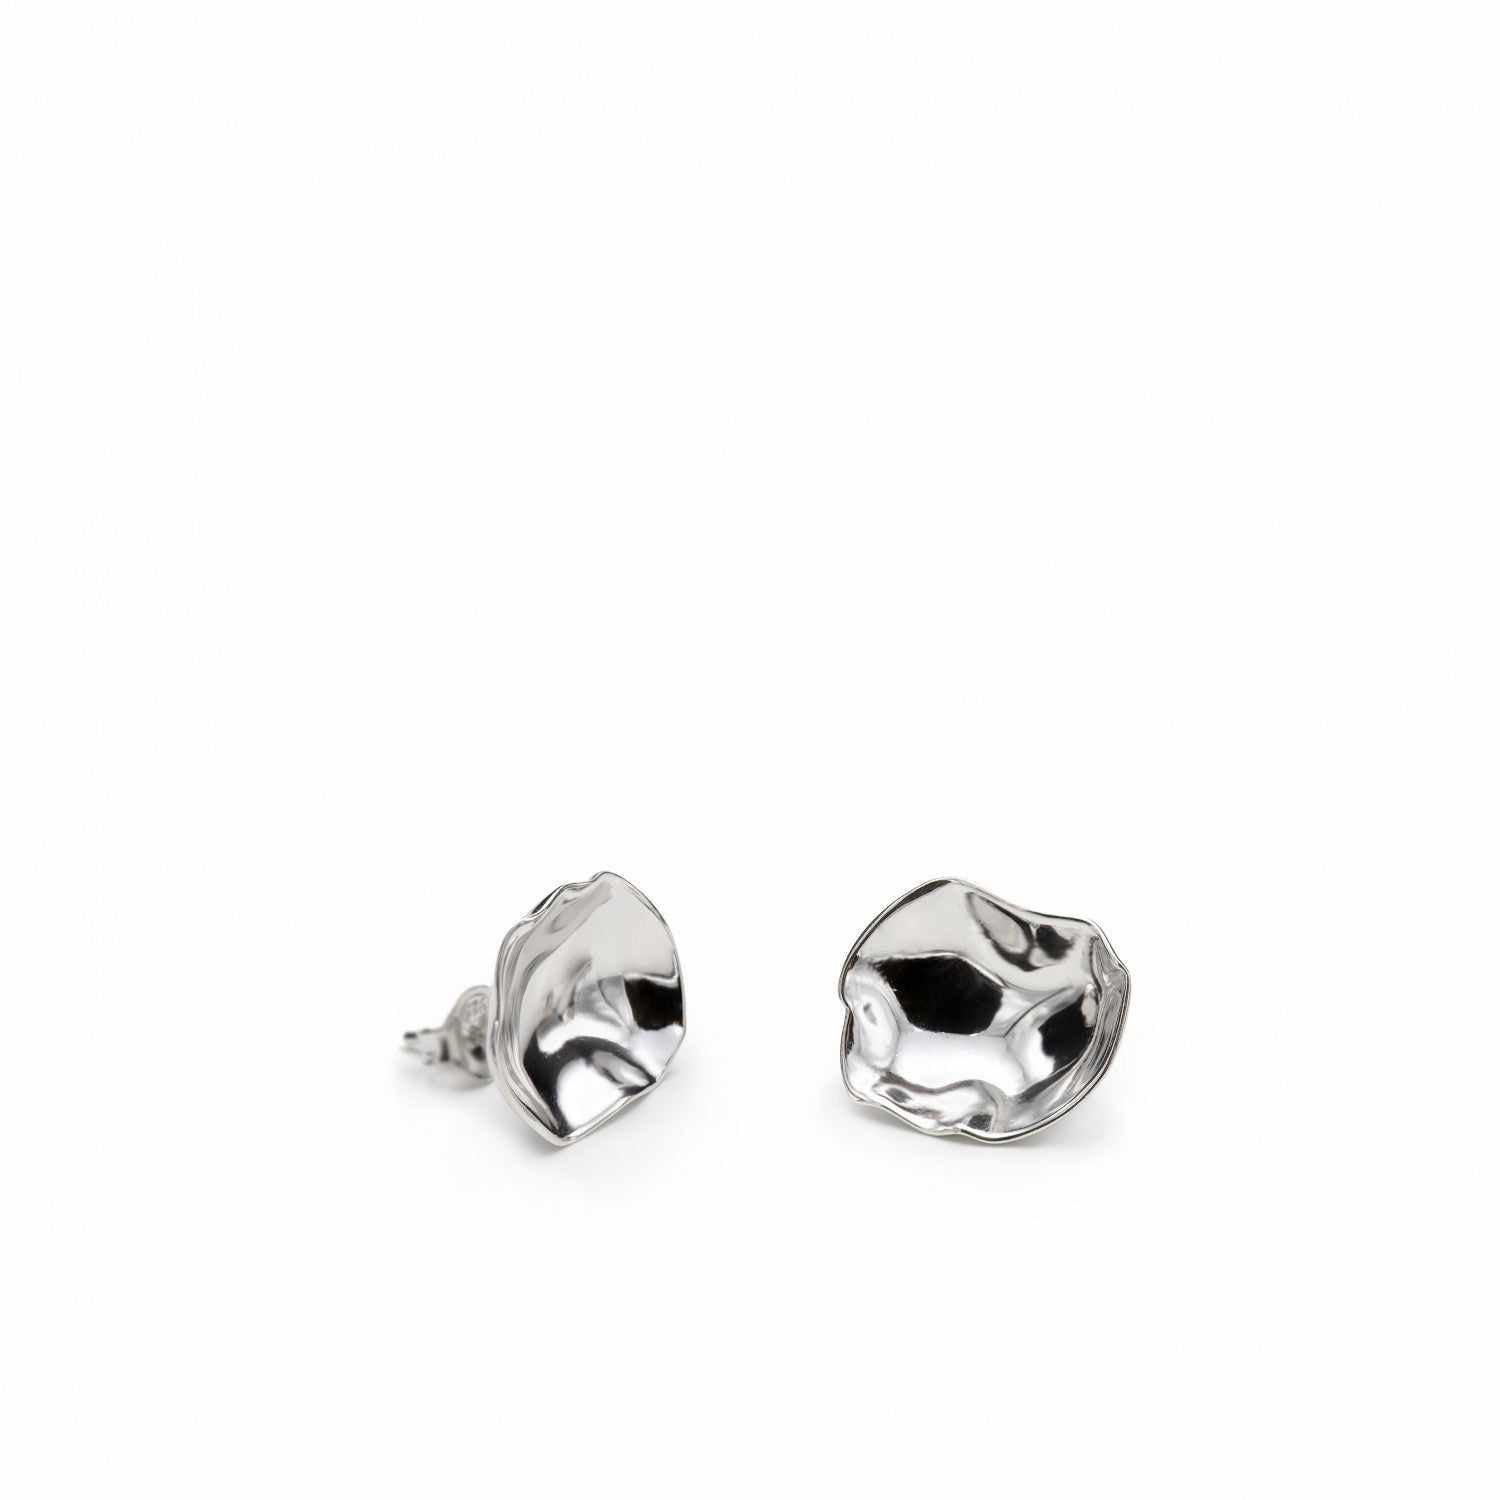 Earrings - Original silver earrings with convex design